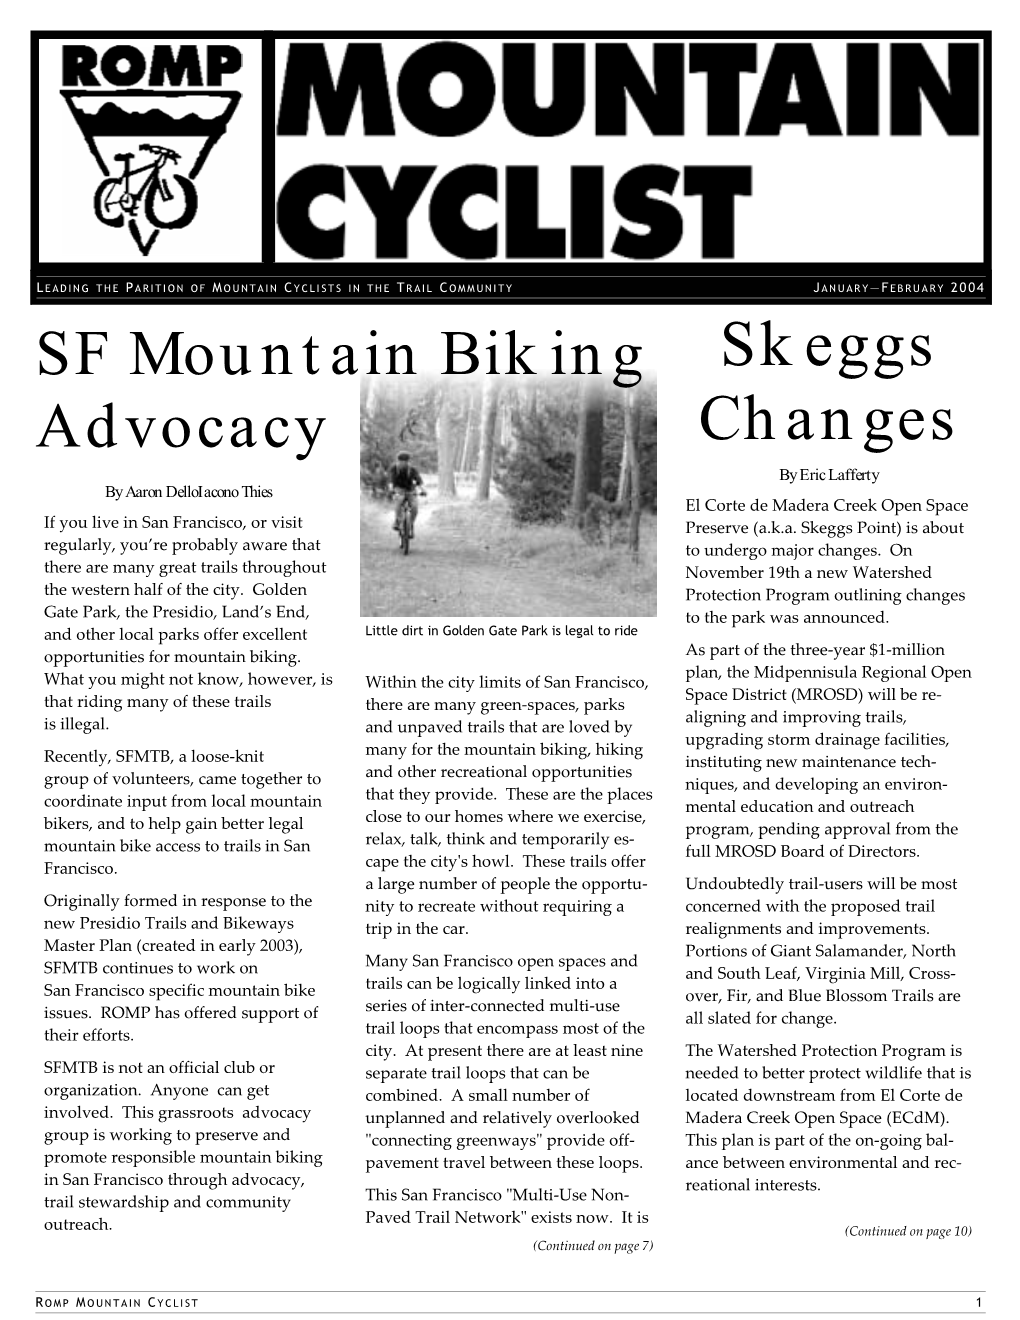 SF Mountain Biking Advocacy Skeggs Changes